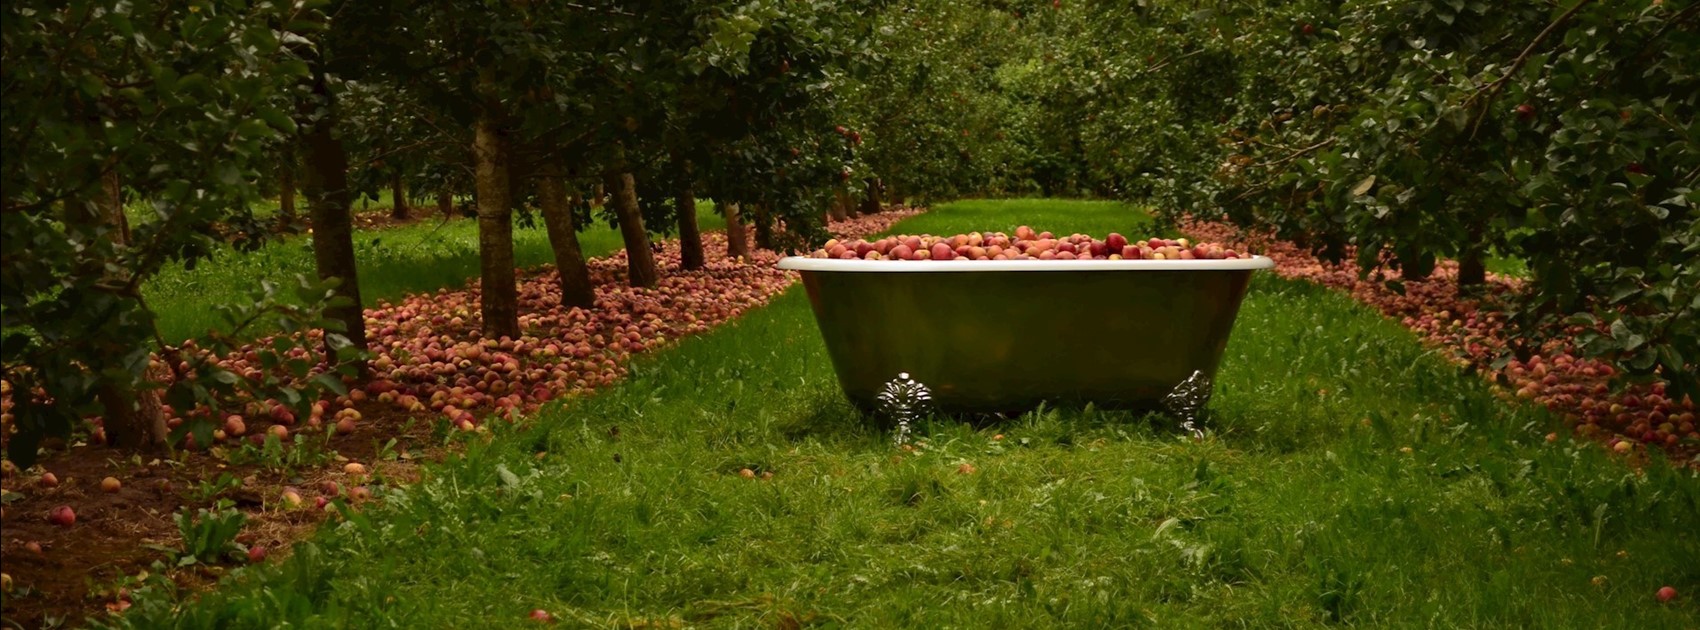 bath-full-of-apples-2